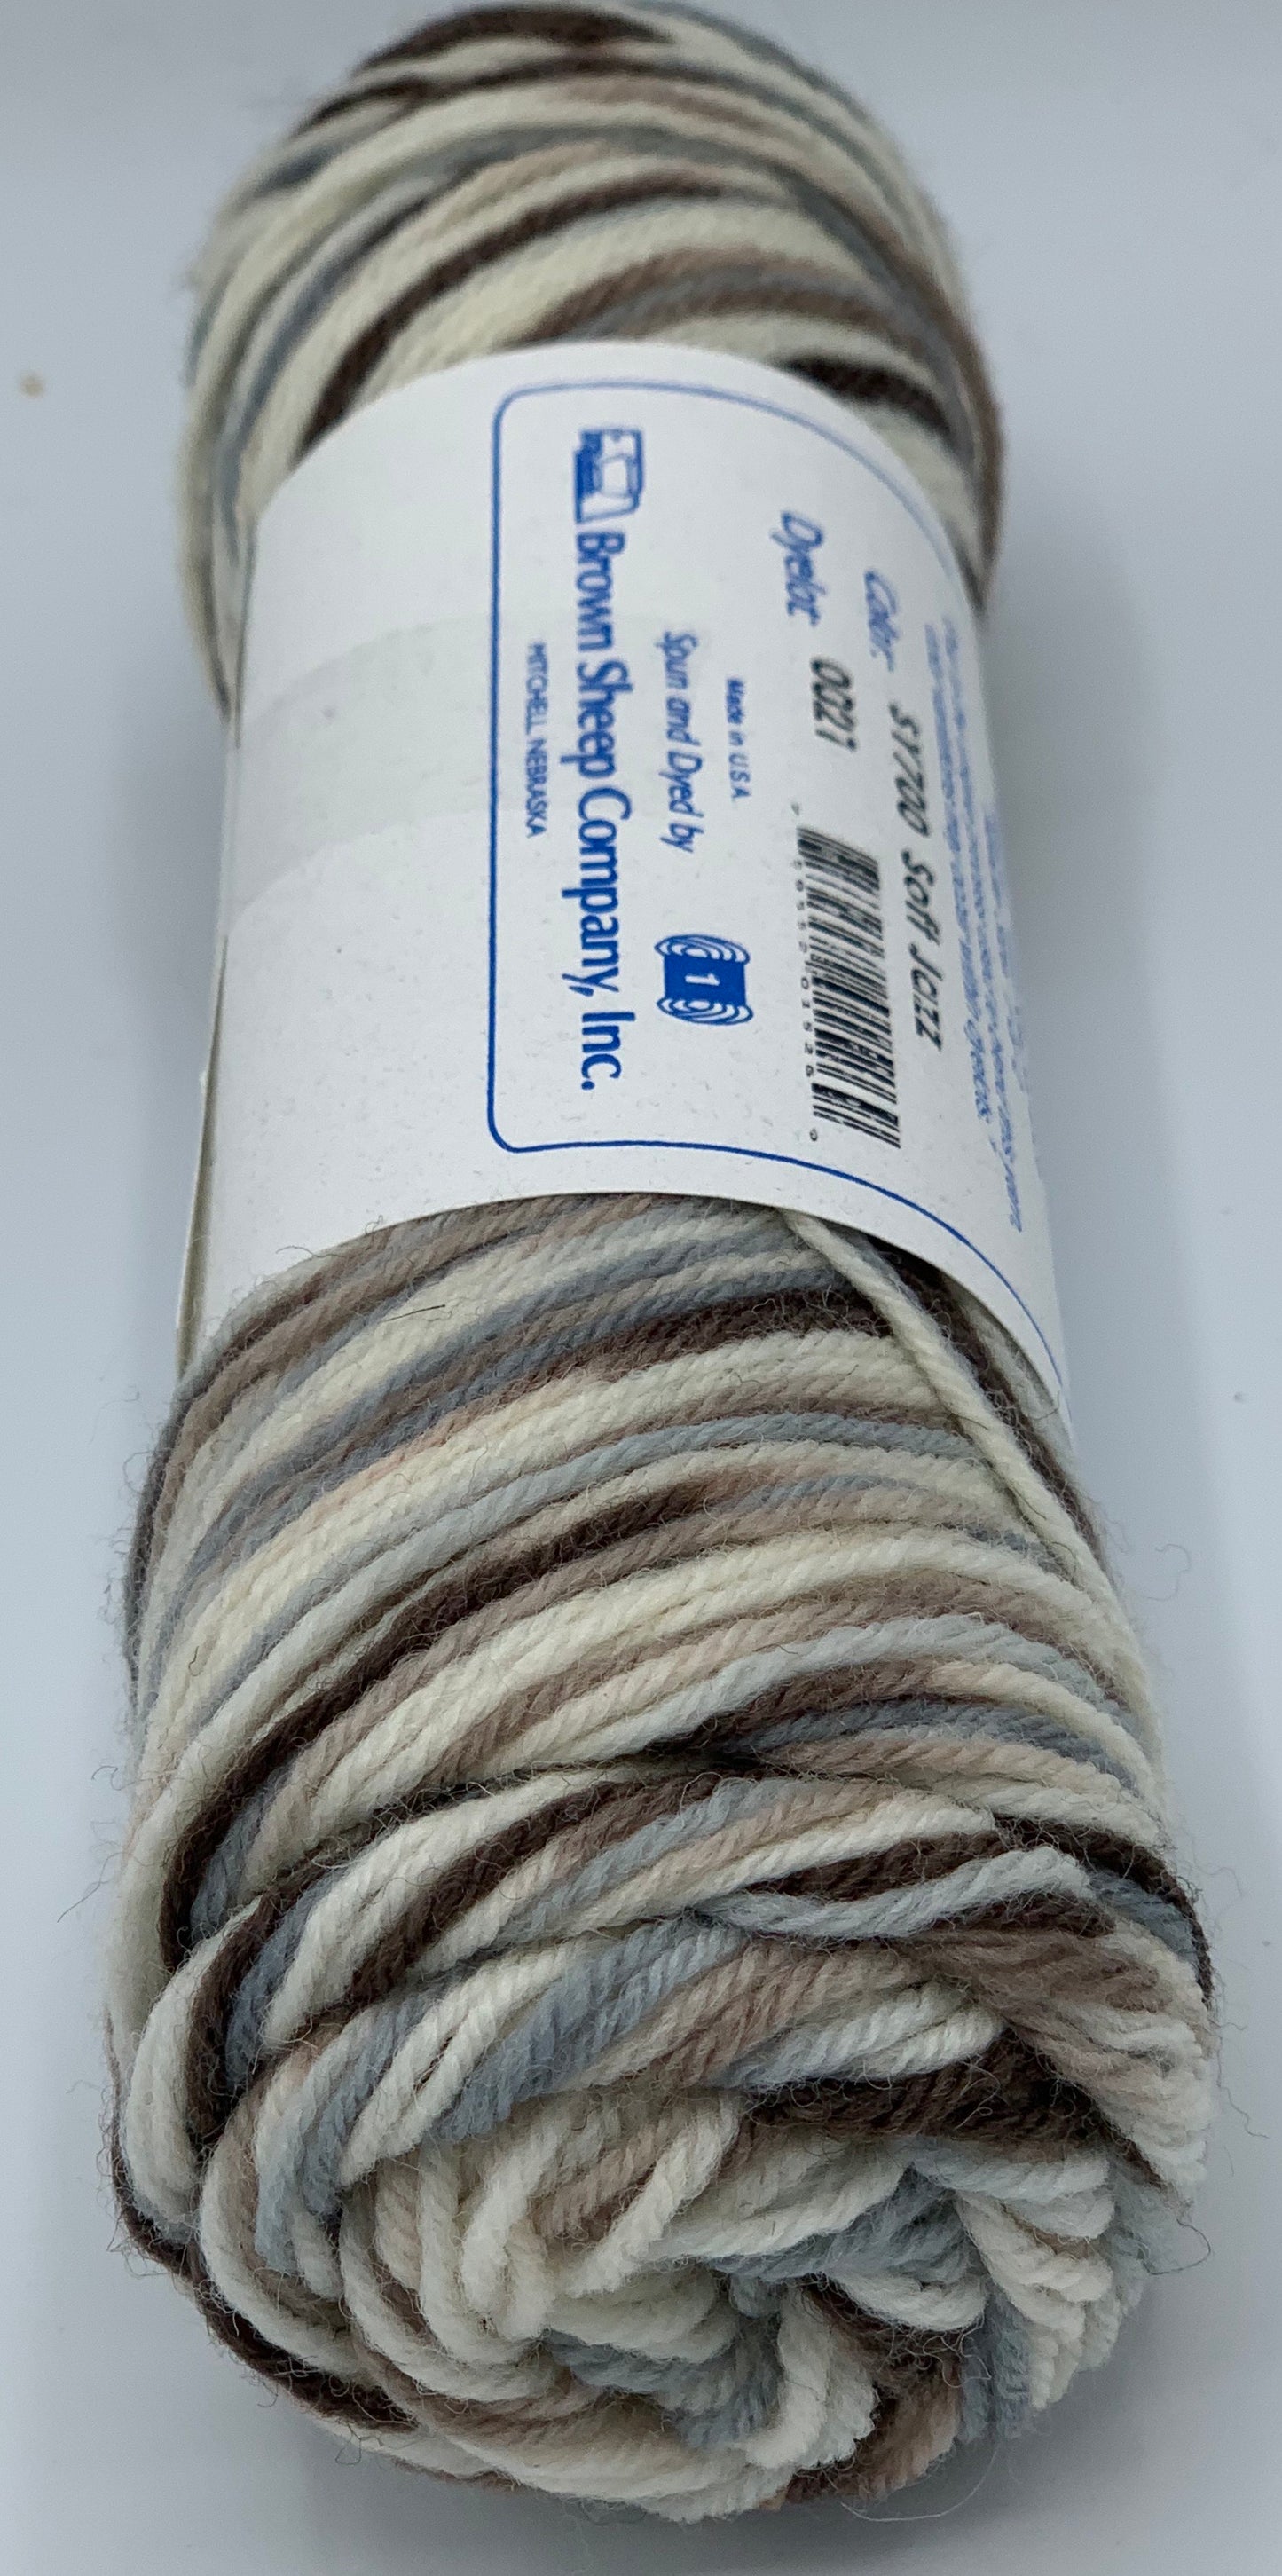 Wildfoote Sock Yarn - Brown Sheep Company, Inc.